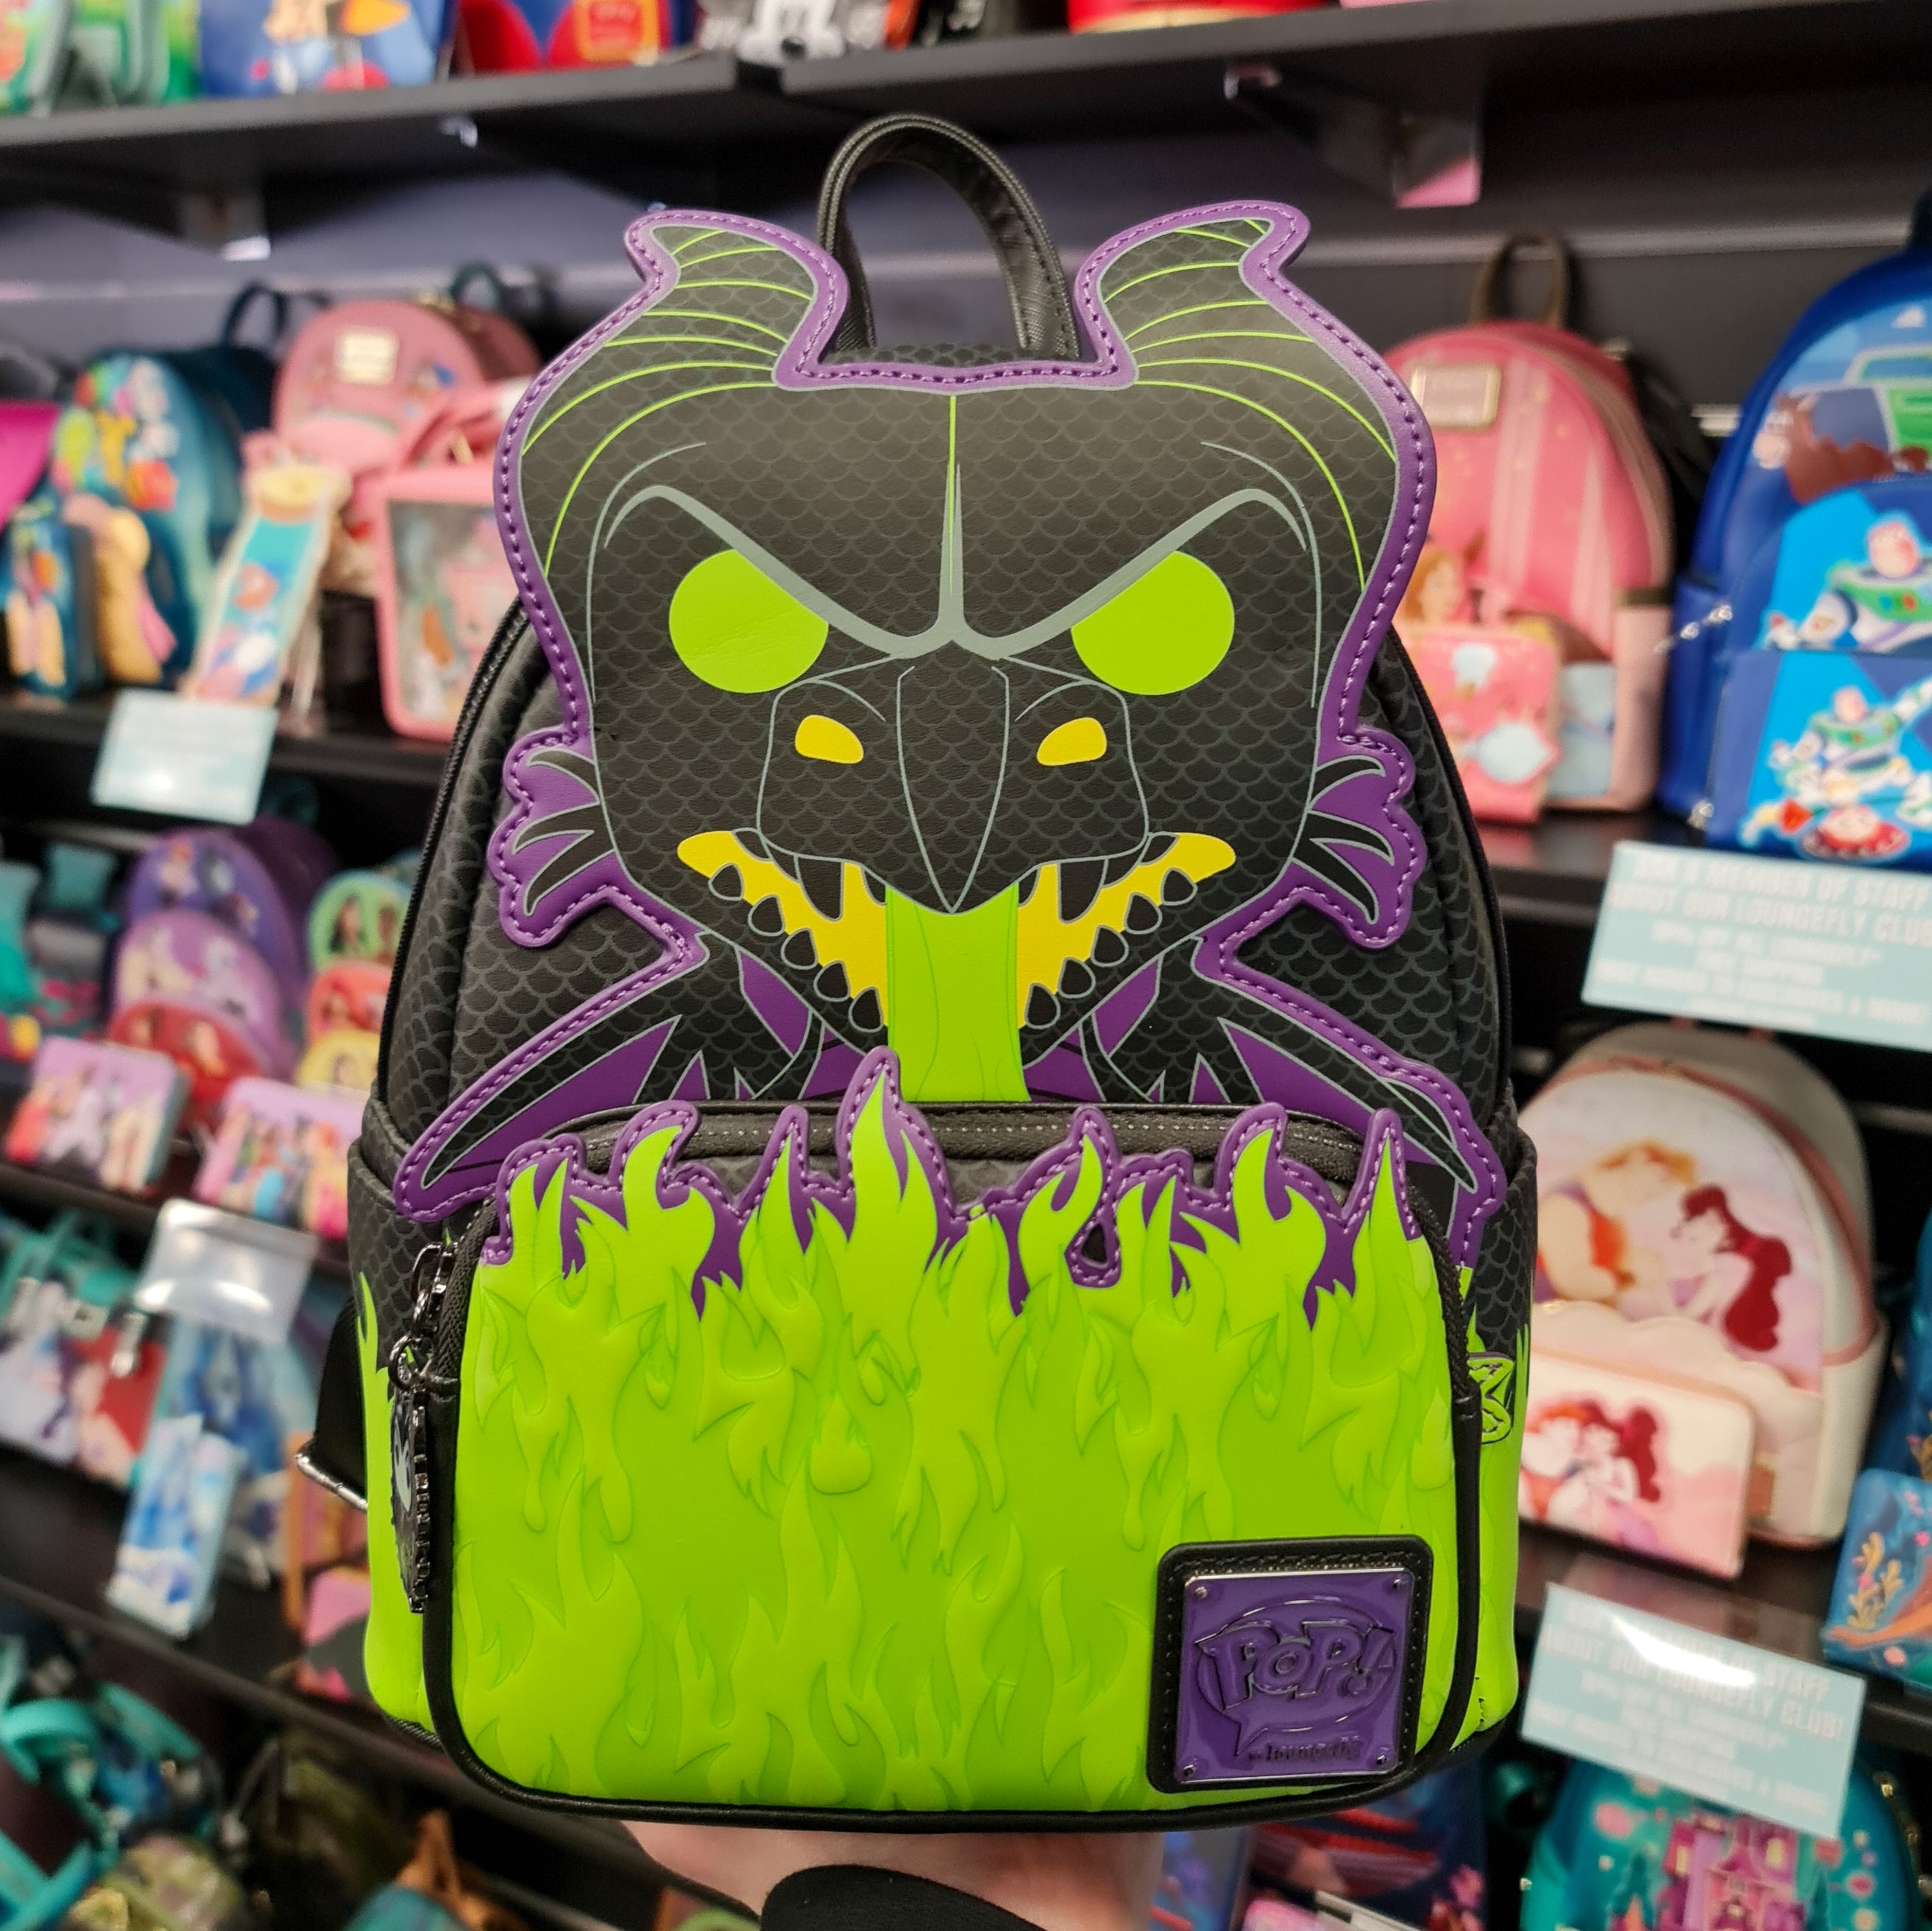 Disney - Villains Club Mini Backpack